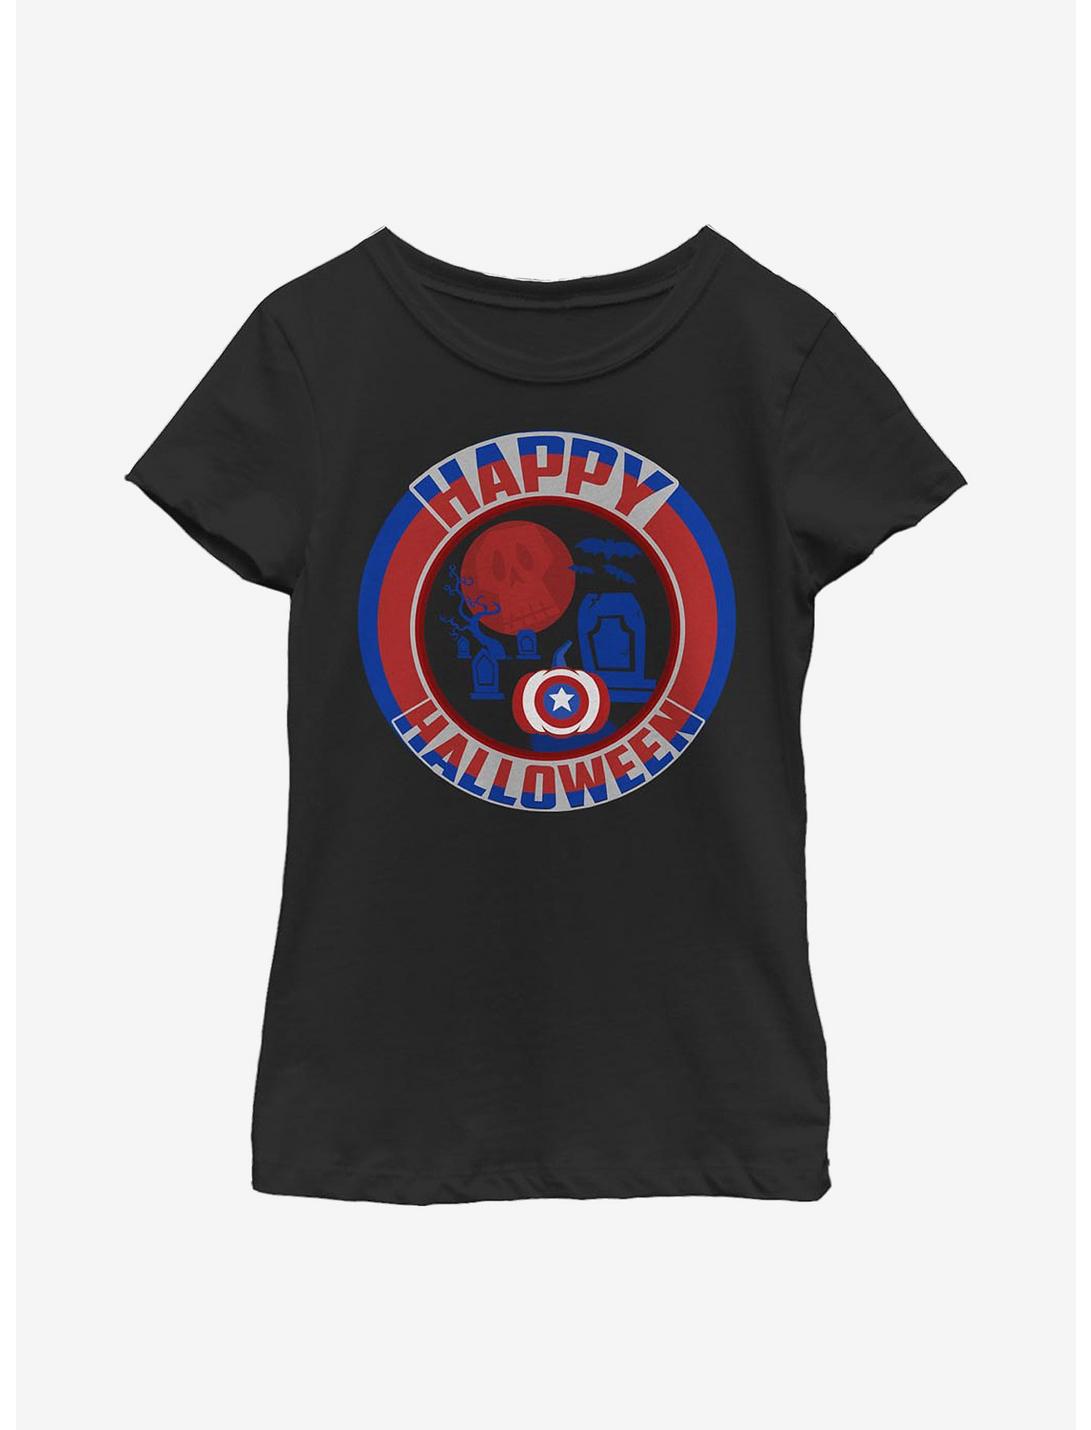 Marvel Captain America Cappy Halloween Youth Girls T-Shirt, BLACK, hi-res